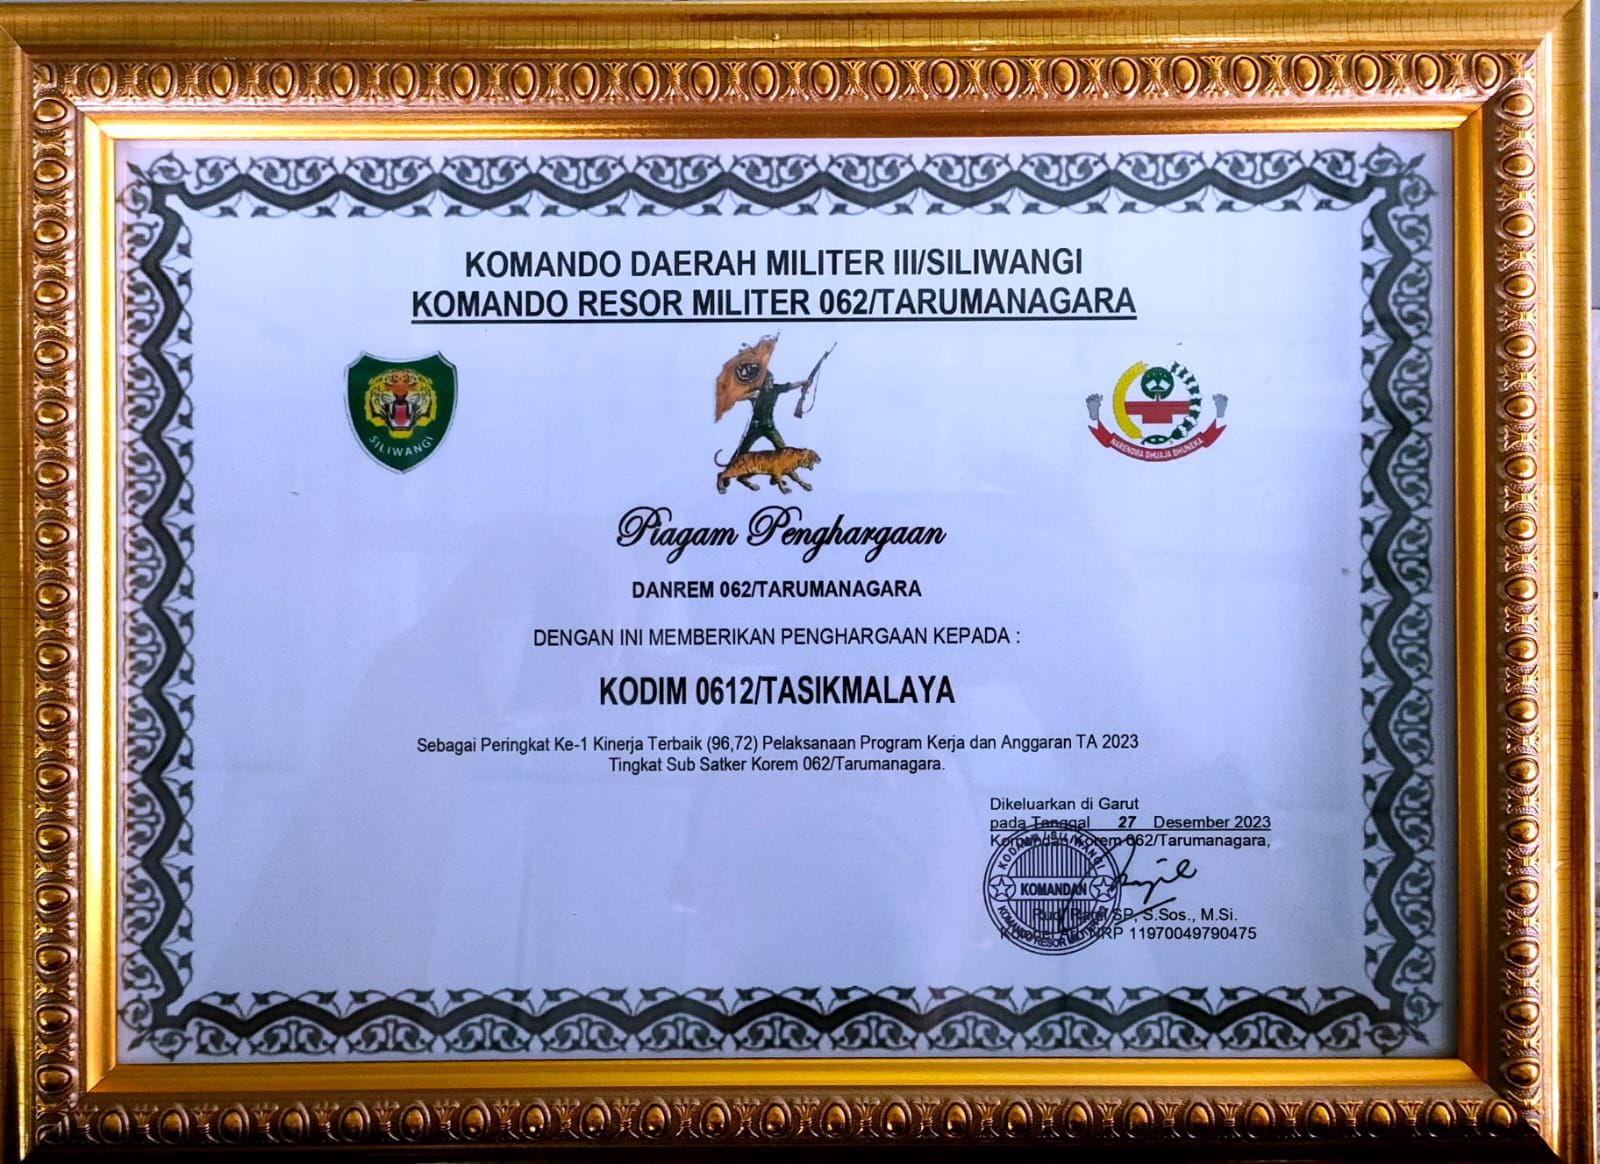 Penghargaan peringkat pertama Kodim 0612 Tasikmalaya dari Korem 062 Tarumanagara